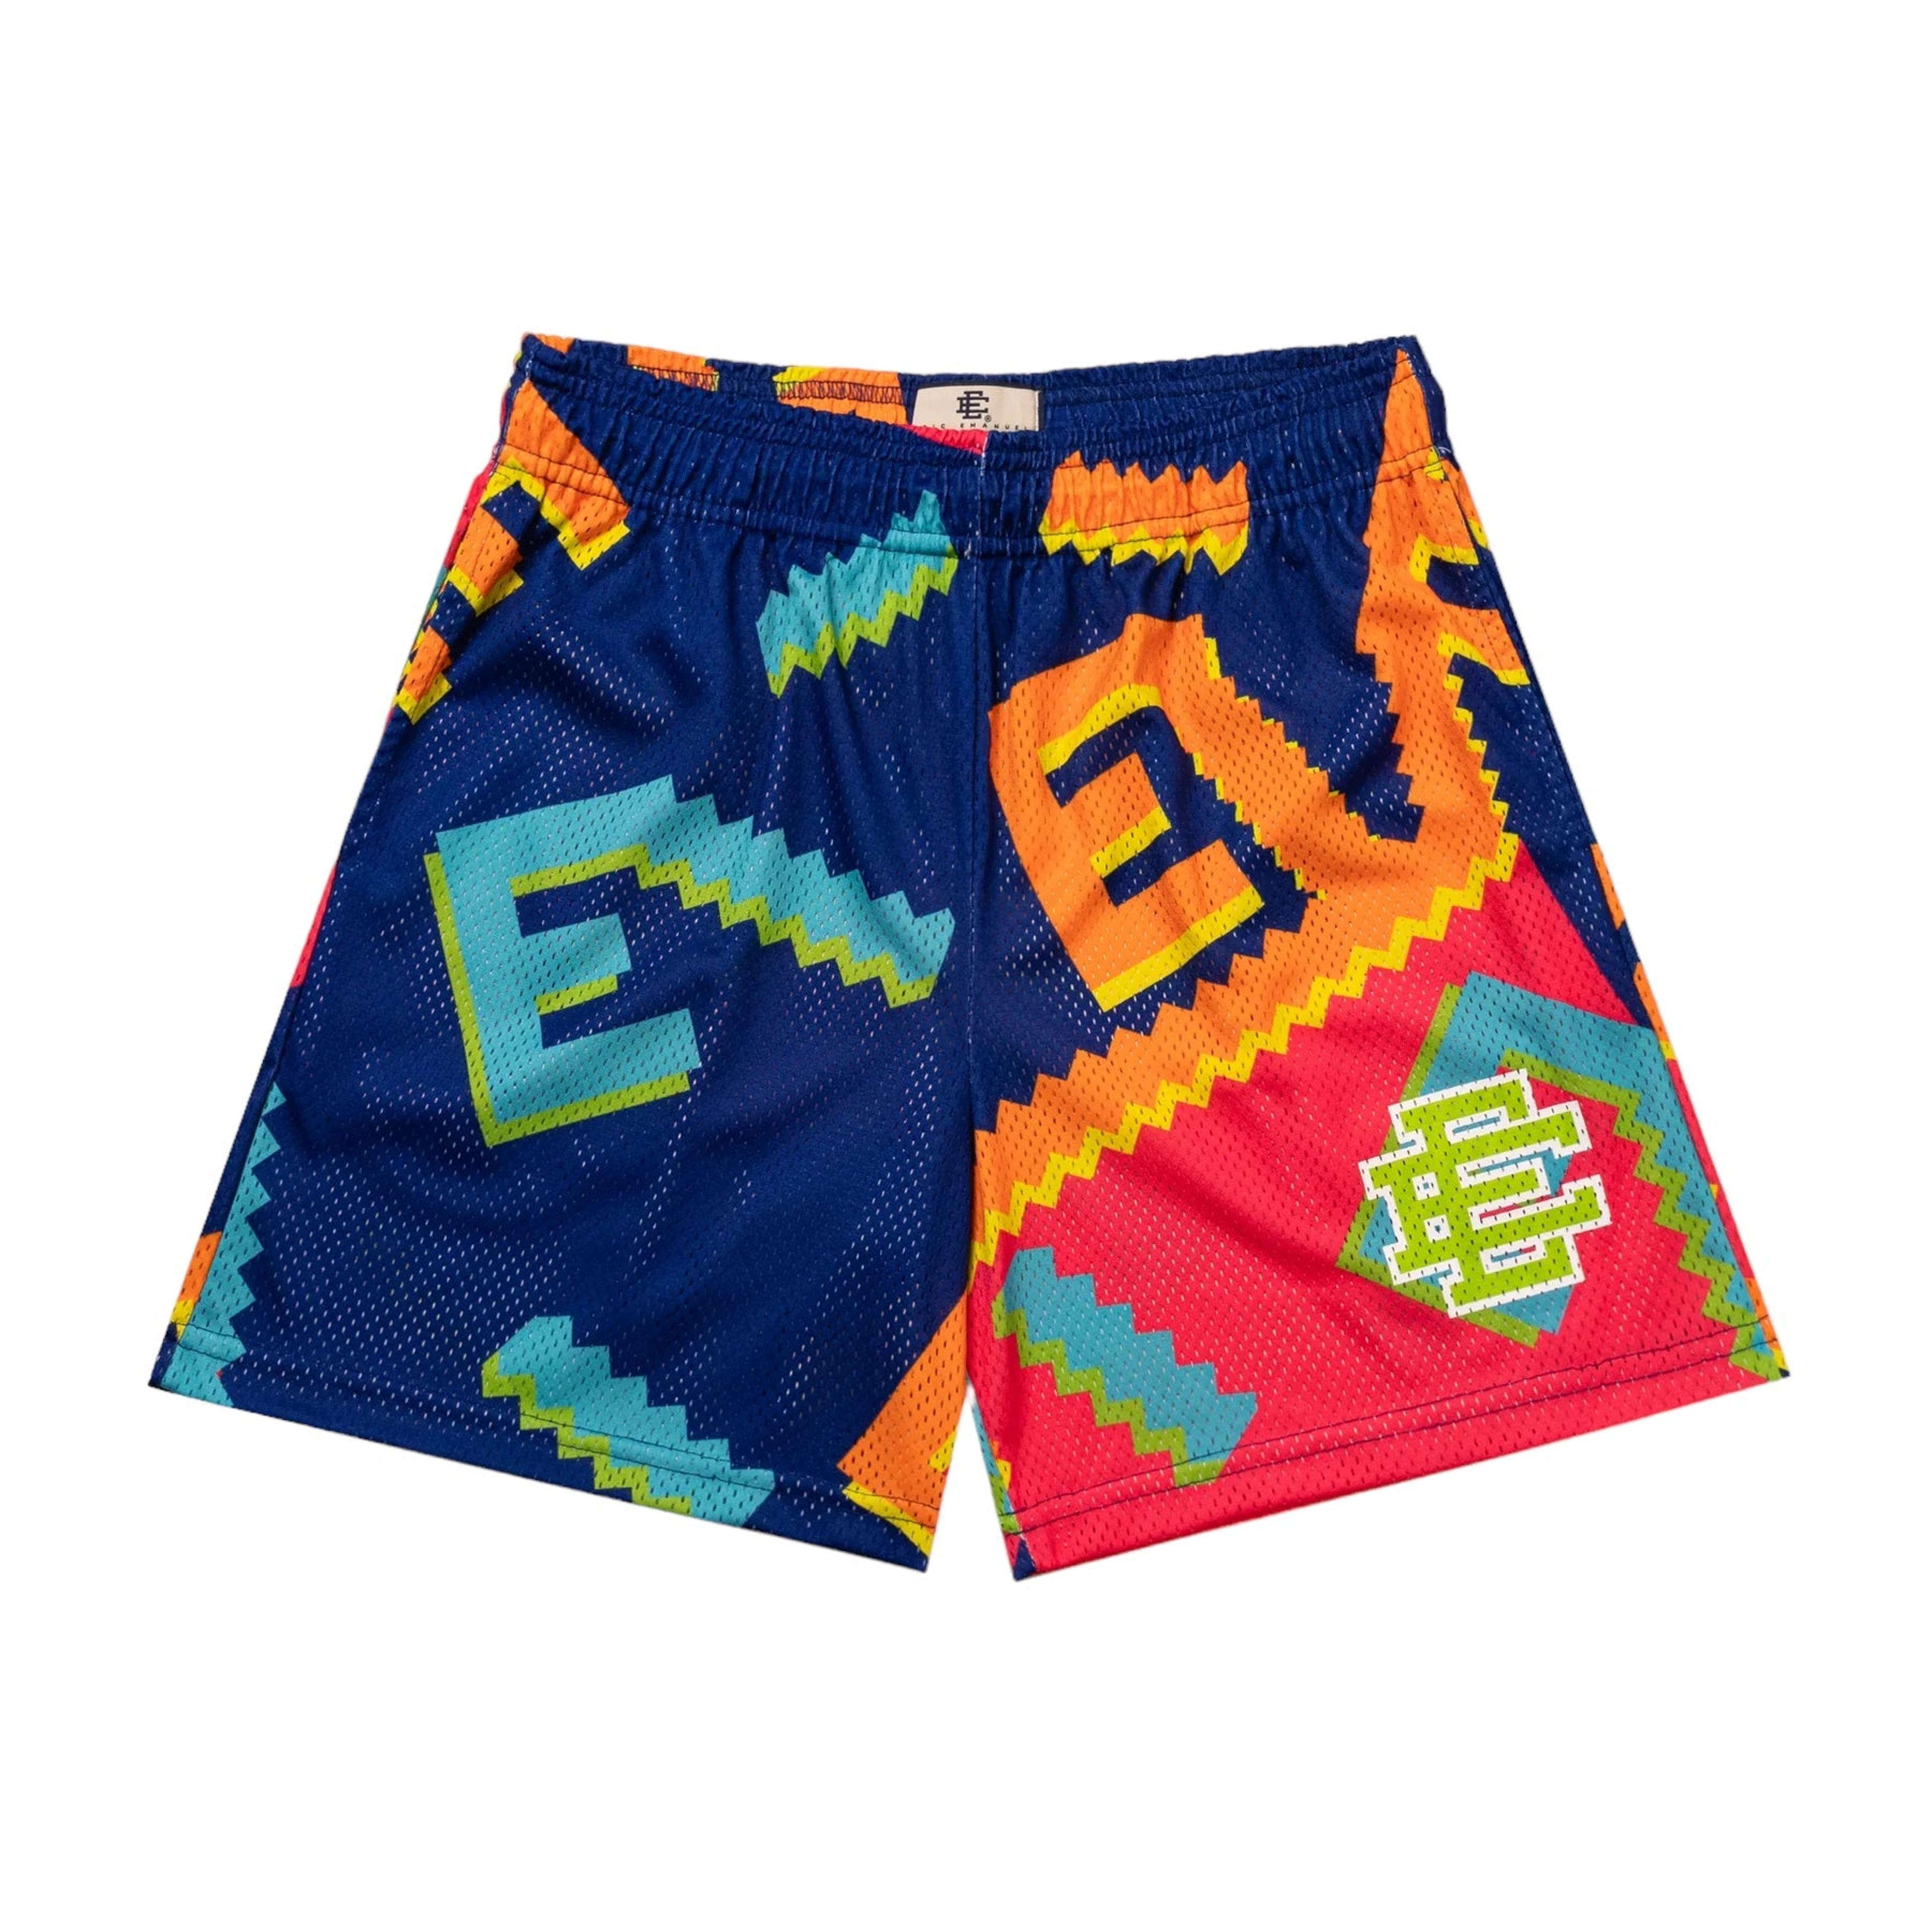 Eric Emanuel Hoodie  Eric Emanuel Shorts Official Store